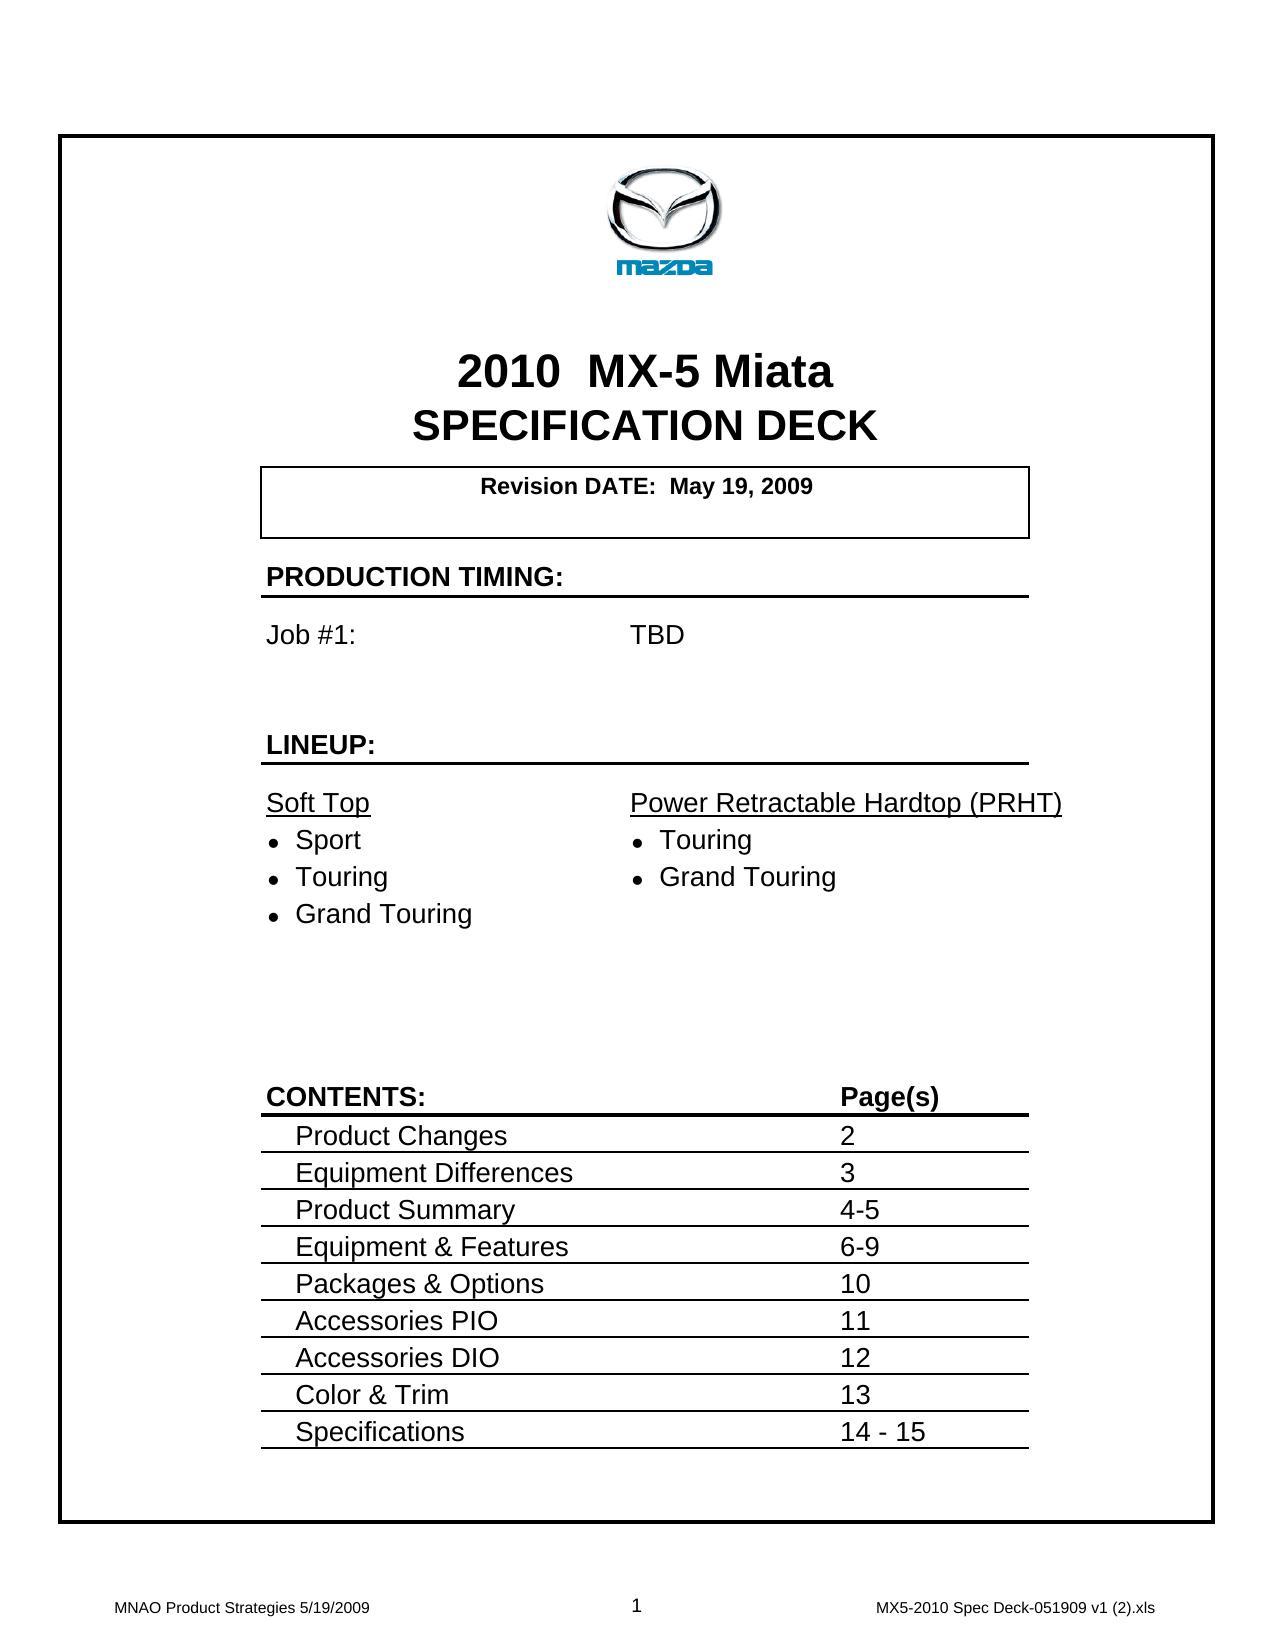 2010-mx-5-miata-specification-deck.pdf